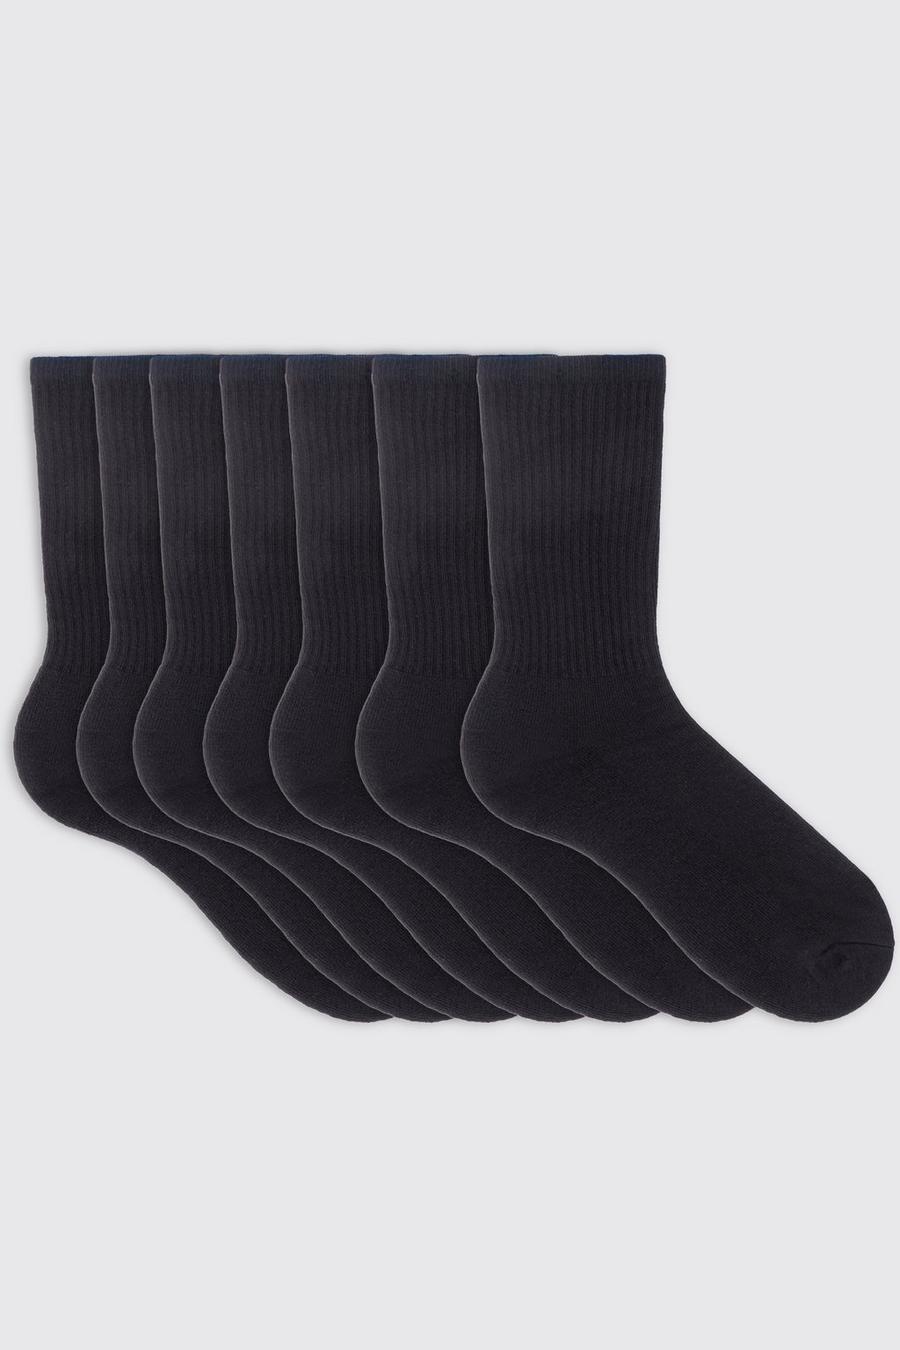 Pack de 7 pares de calcetines deportivos lisos, Black image number 1